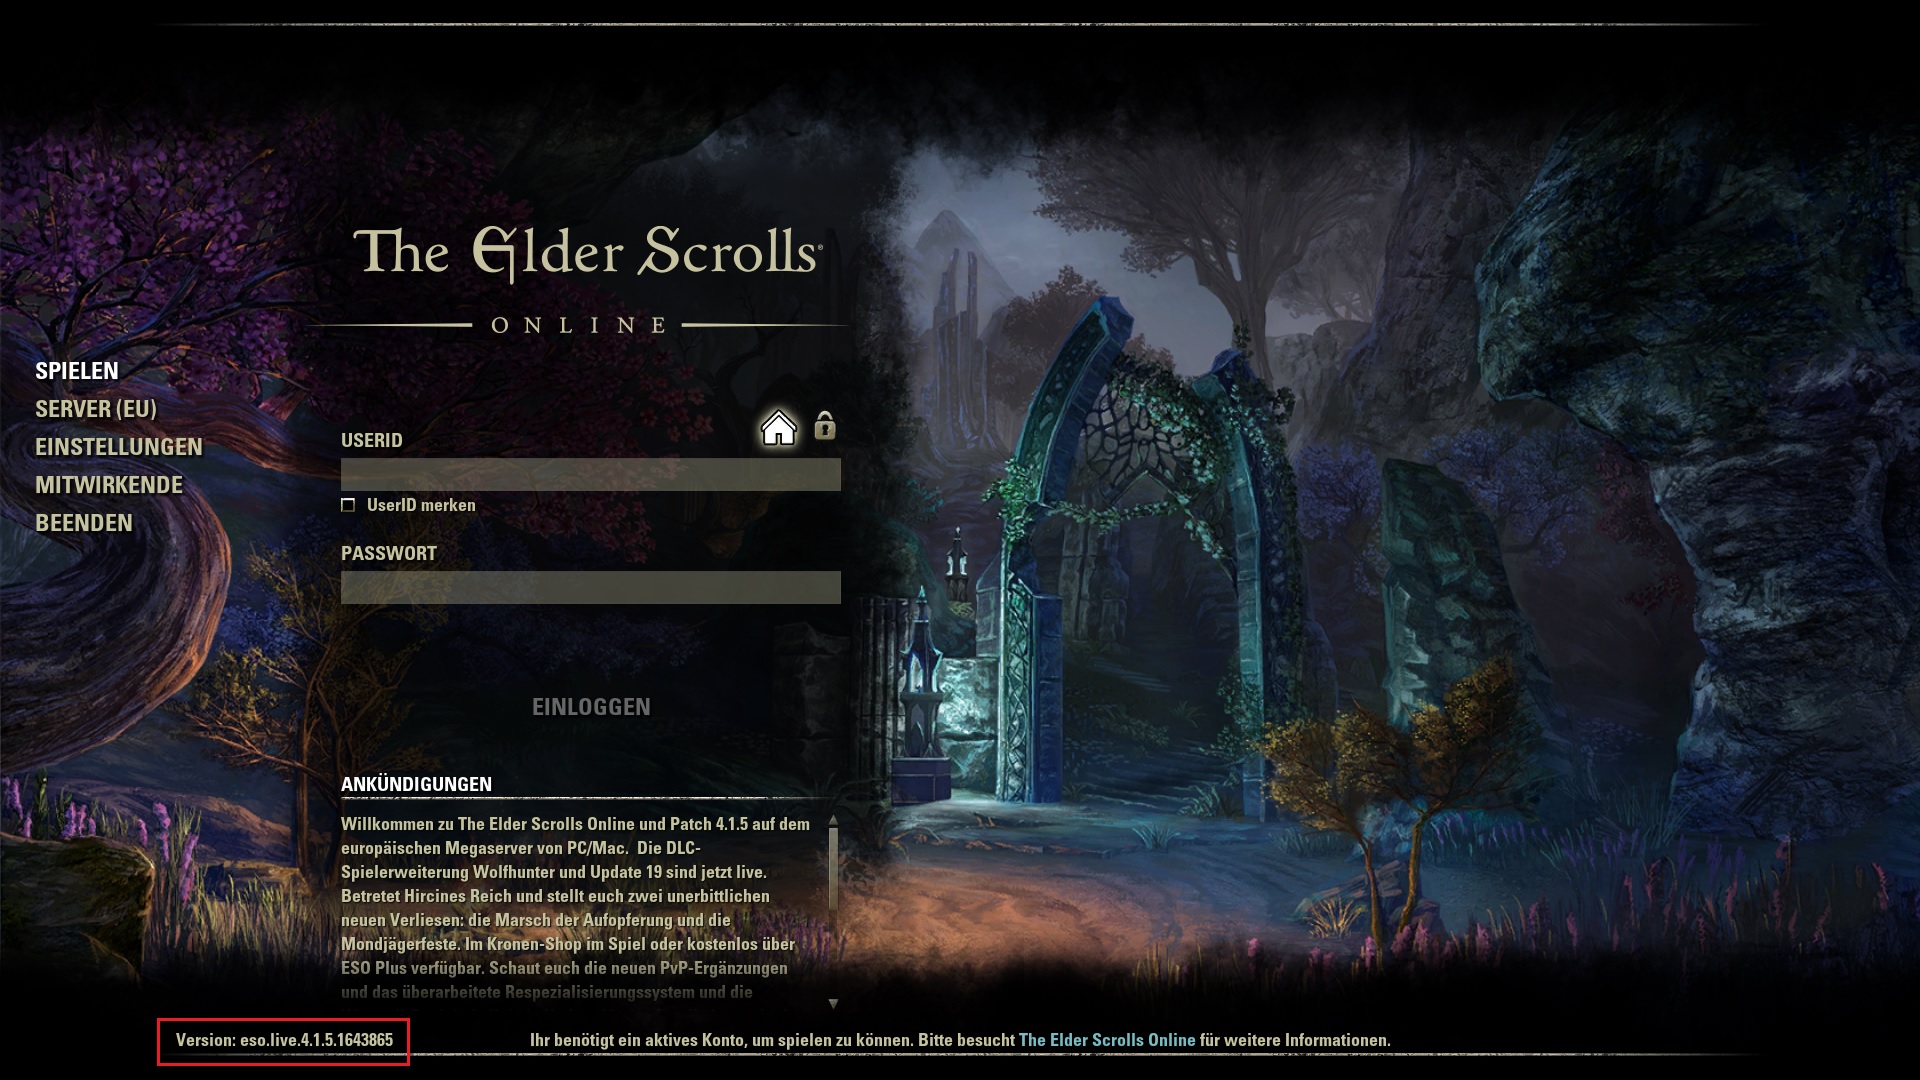 0_1534195677814_The_Elder_Scrolls_Online_Game_4.1.5.1643865_Version.jpg